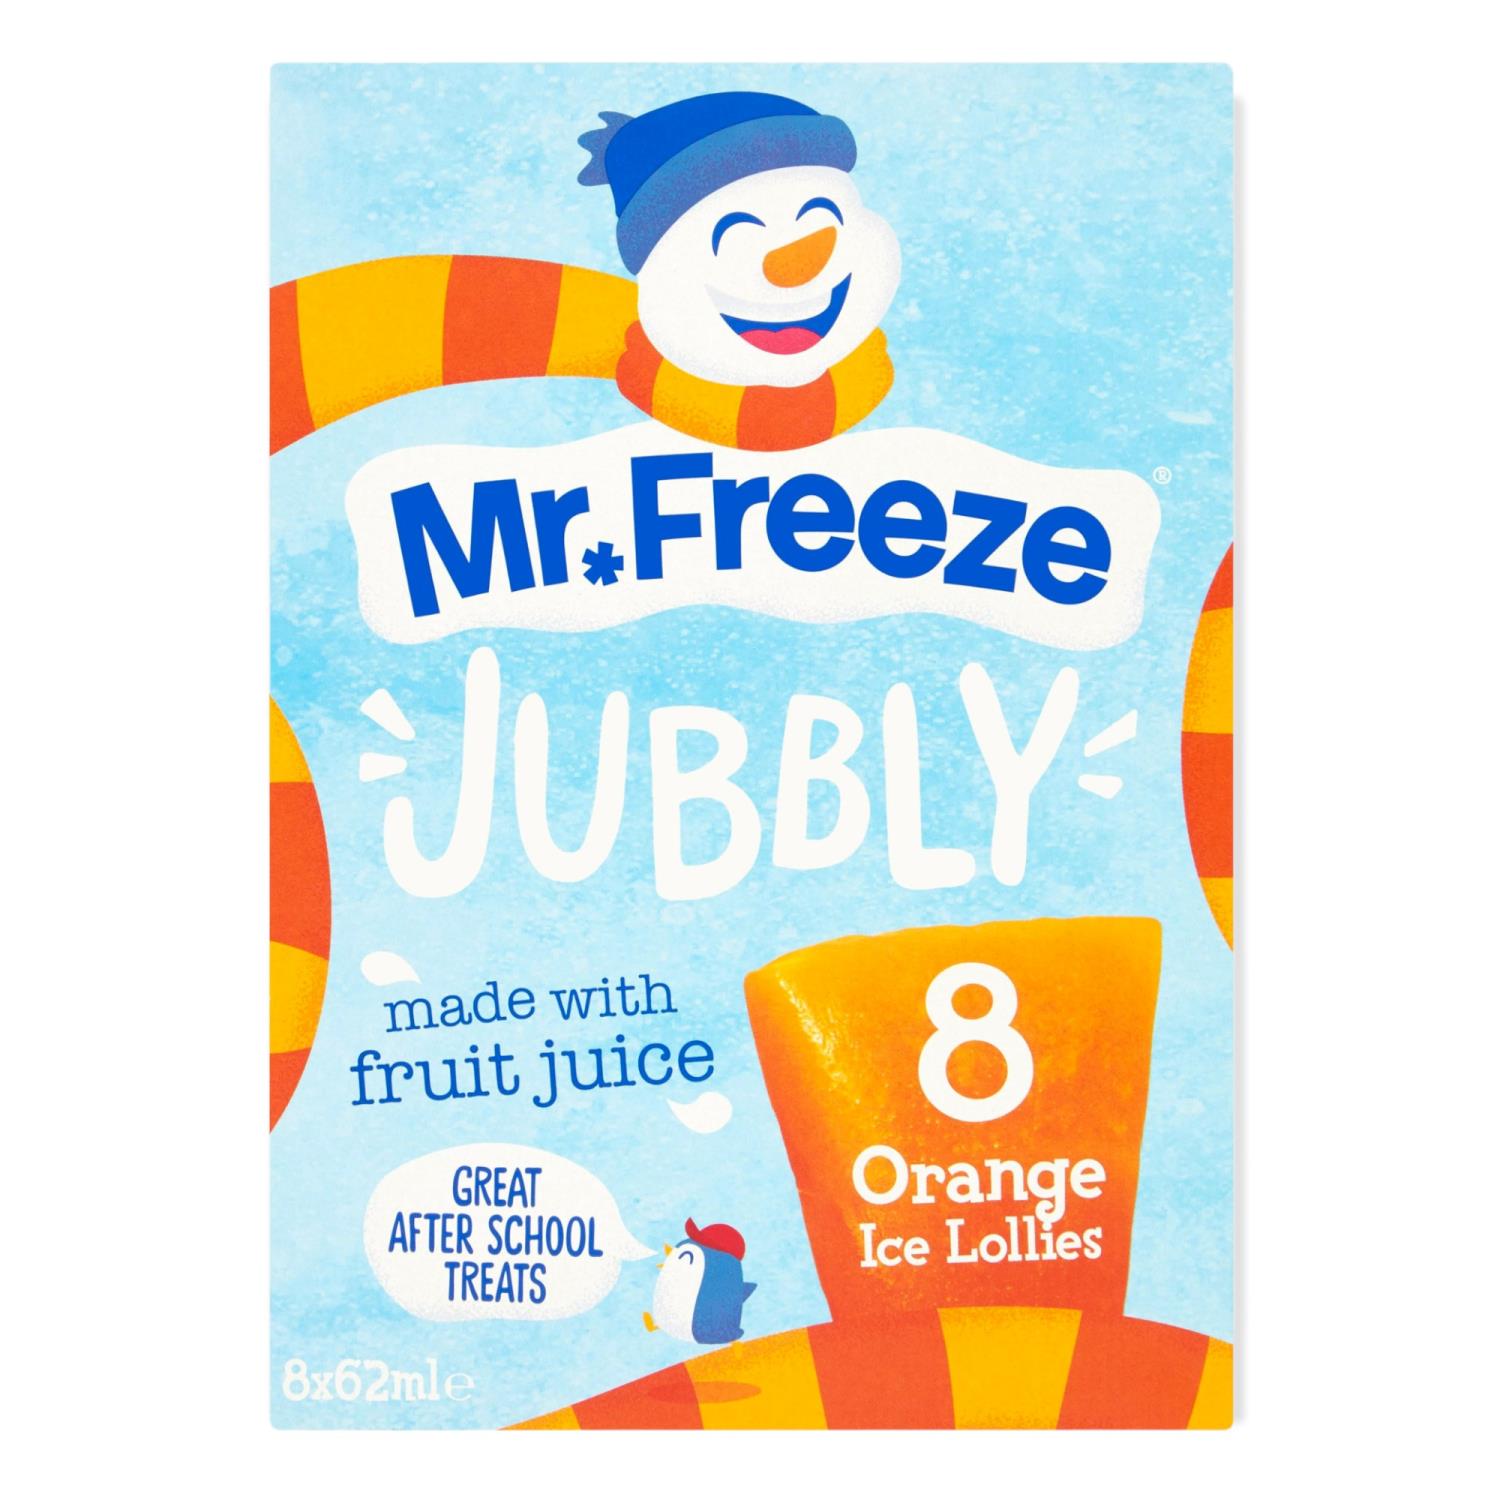 Mr.Freeze Jubbly Orange Ice Lollies 8pk